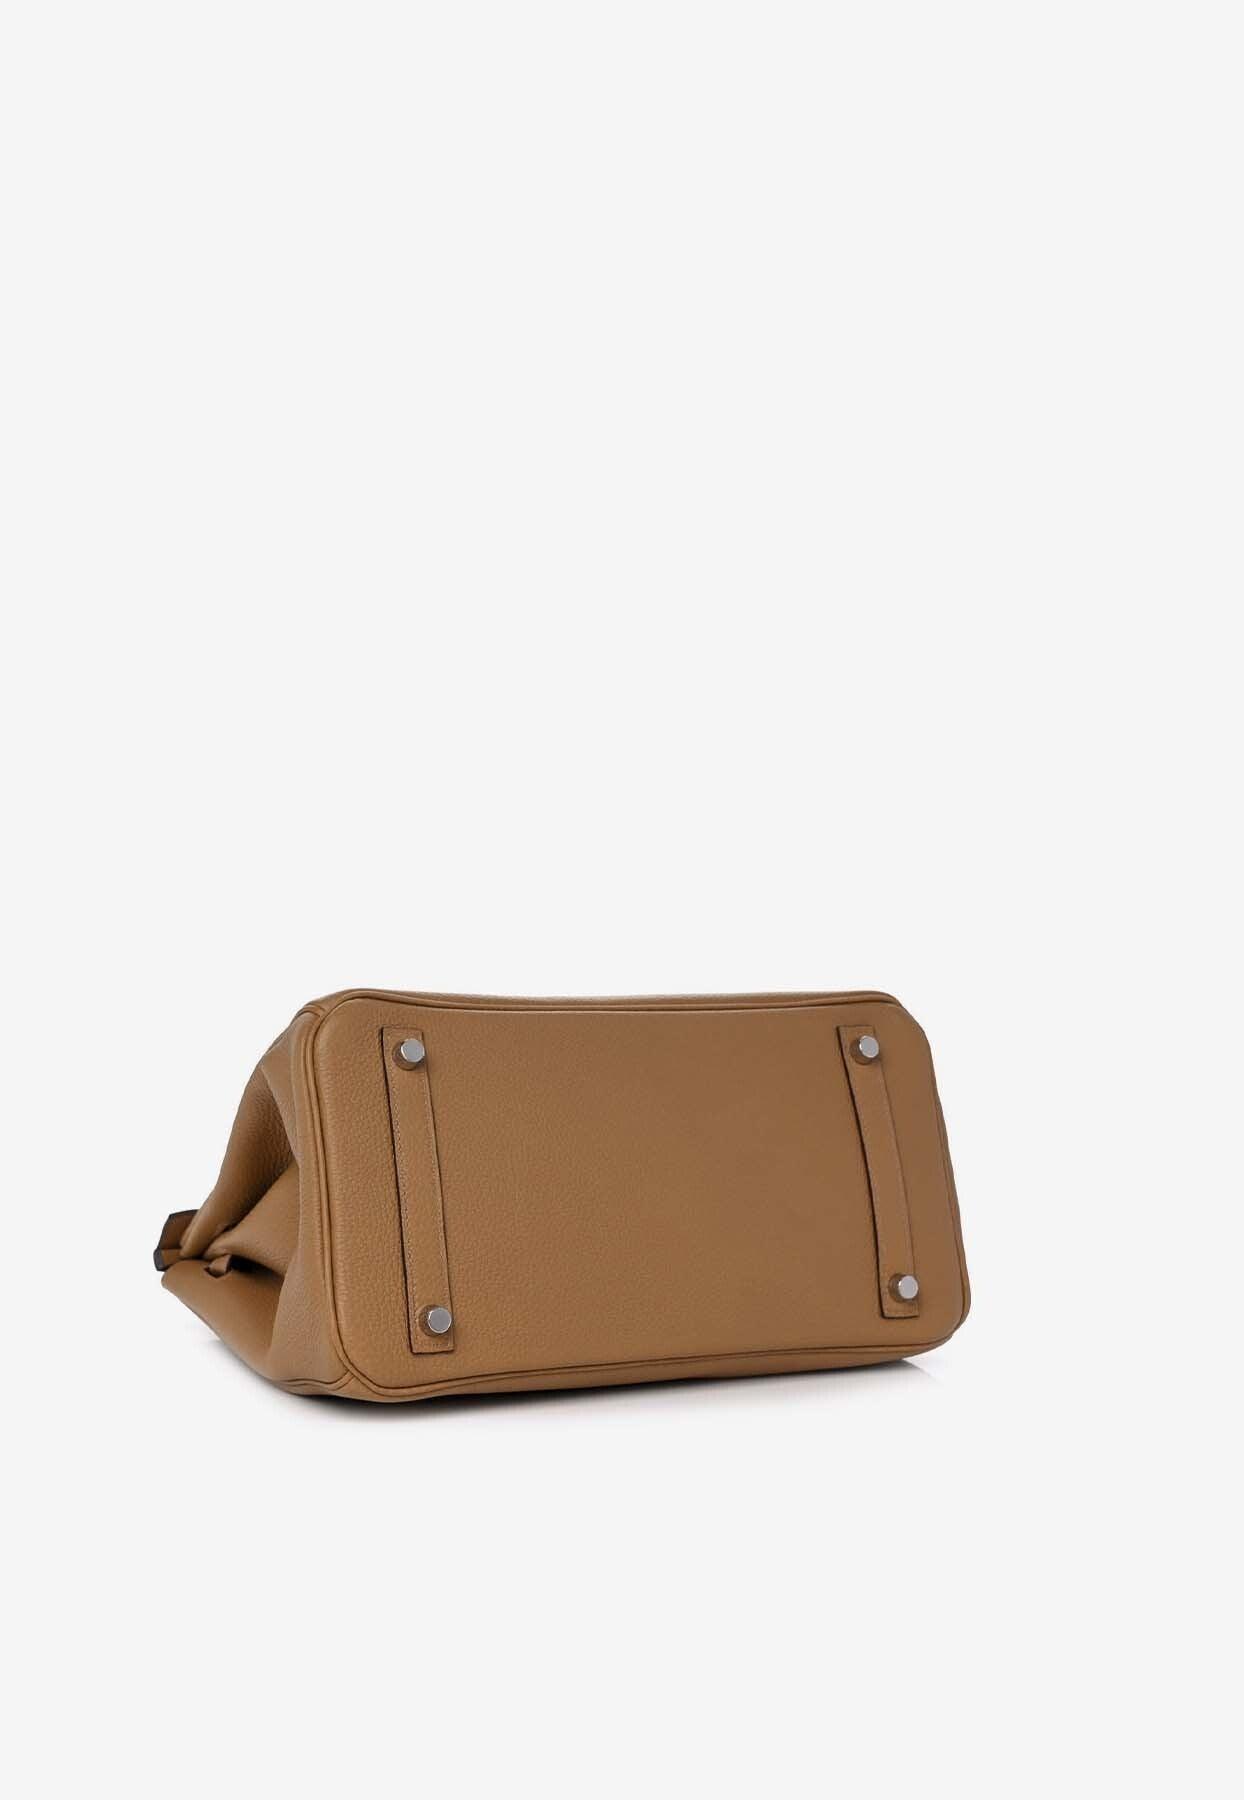 Hermes Birkin Handbag Biscuit Swift with Palladium Hardware 30